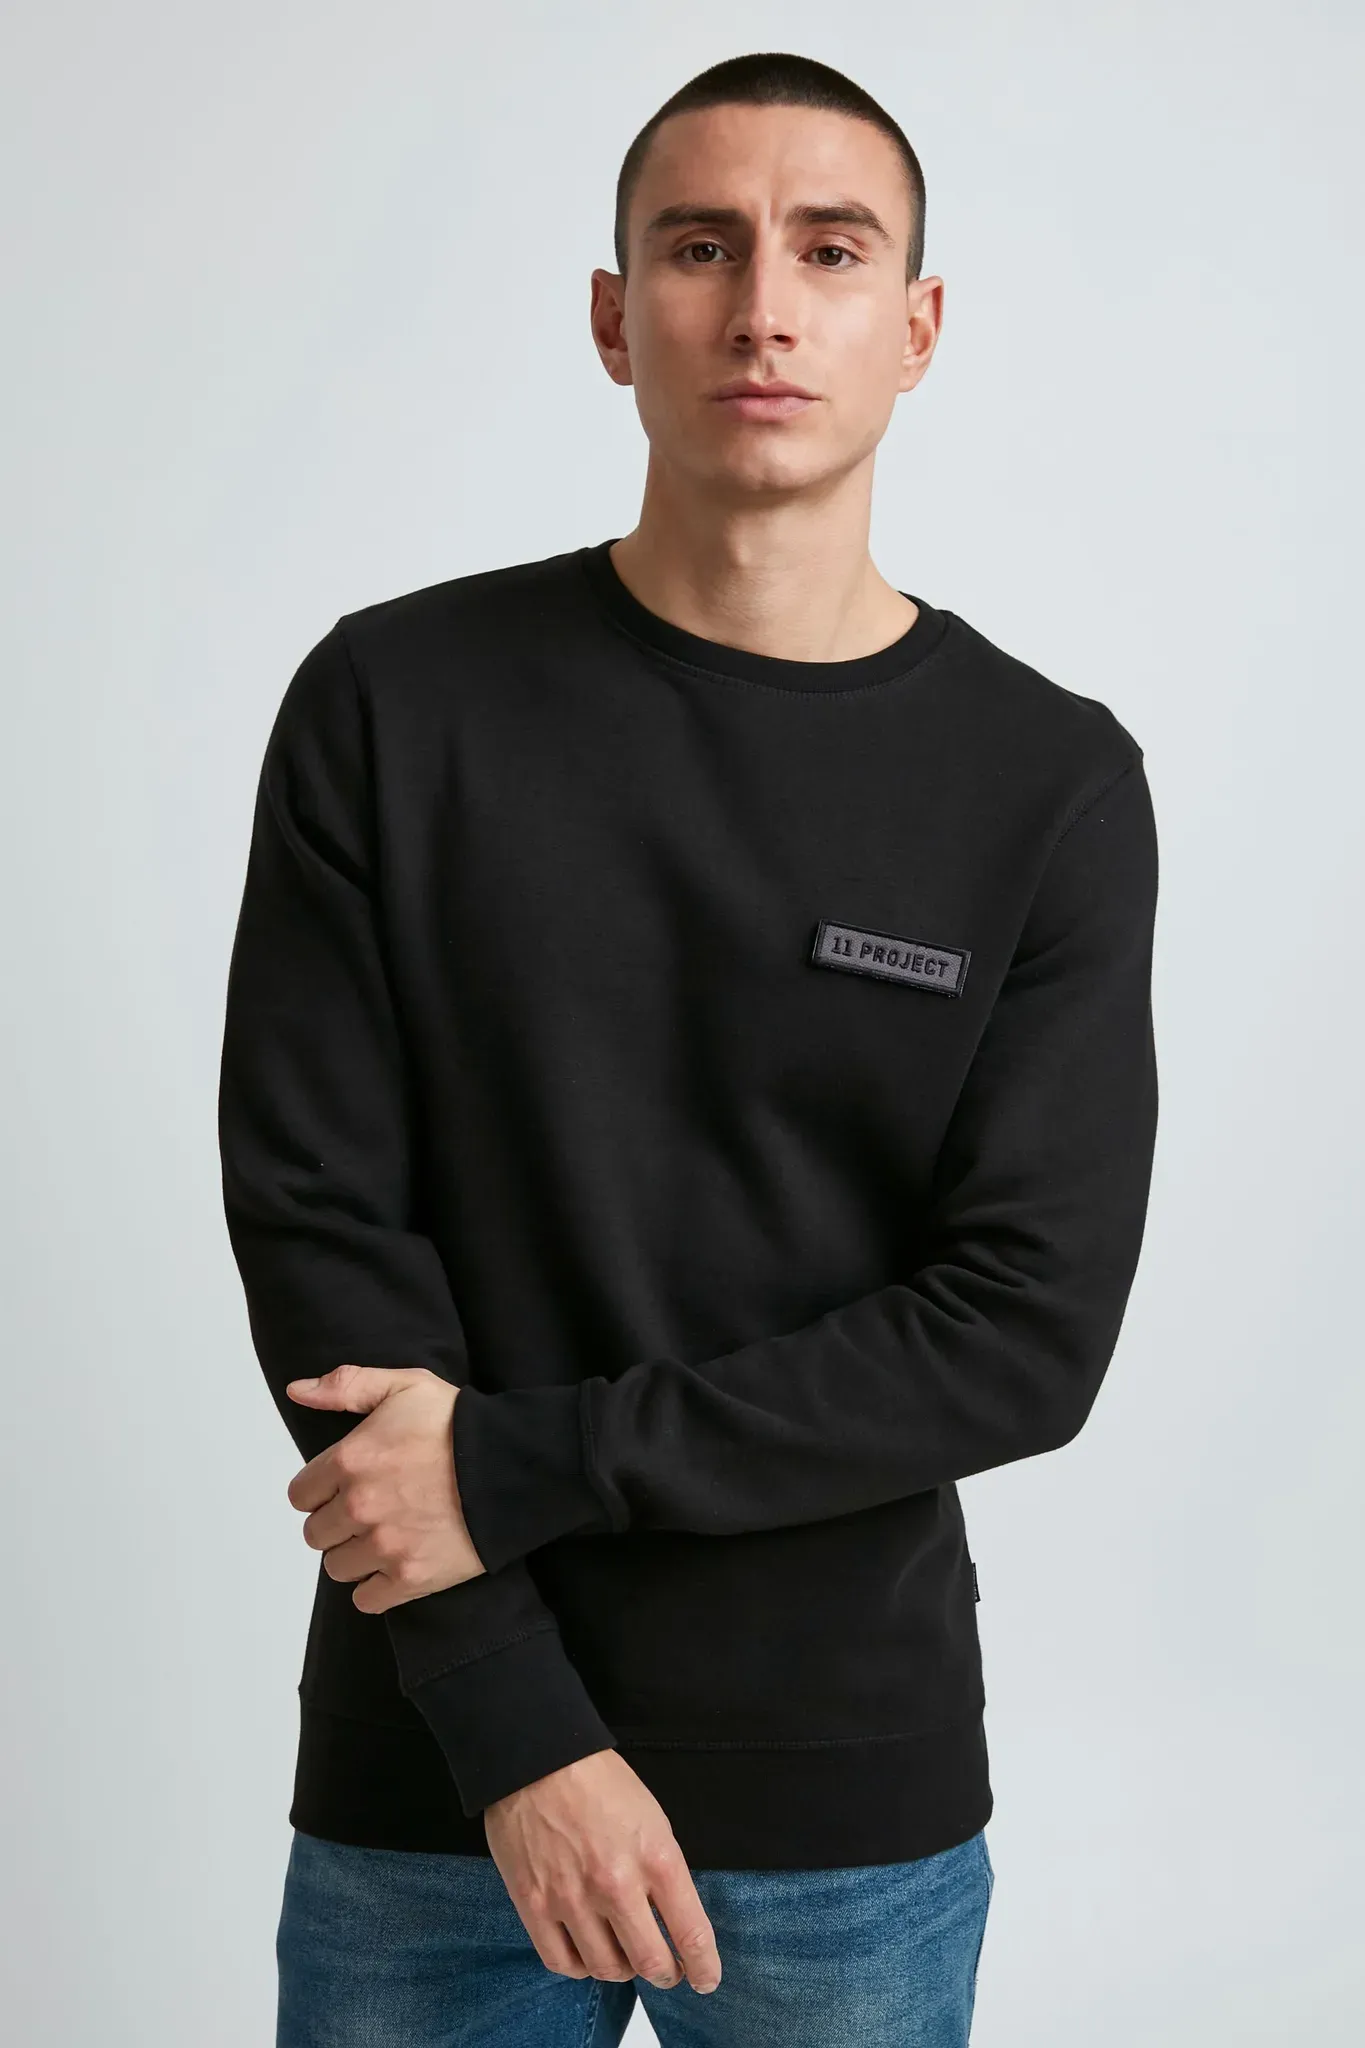 Sweater 11 PROJECT "11 Project PRSibo" Gr. XXL, schwarz (black) Herren Sweatshirts